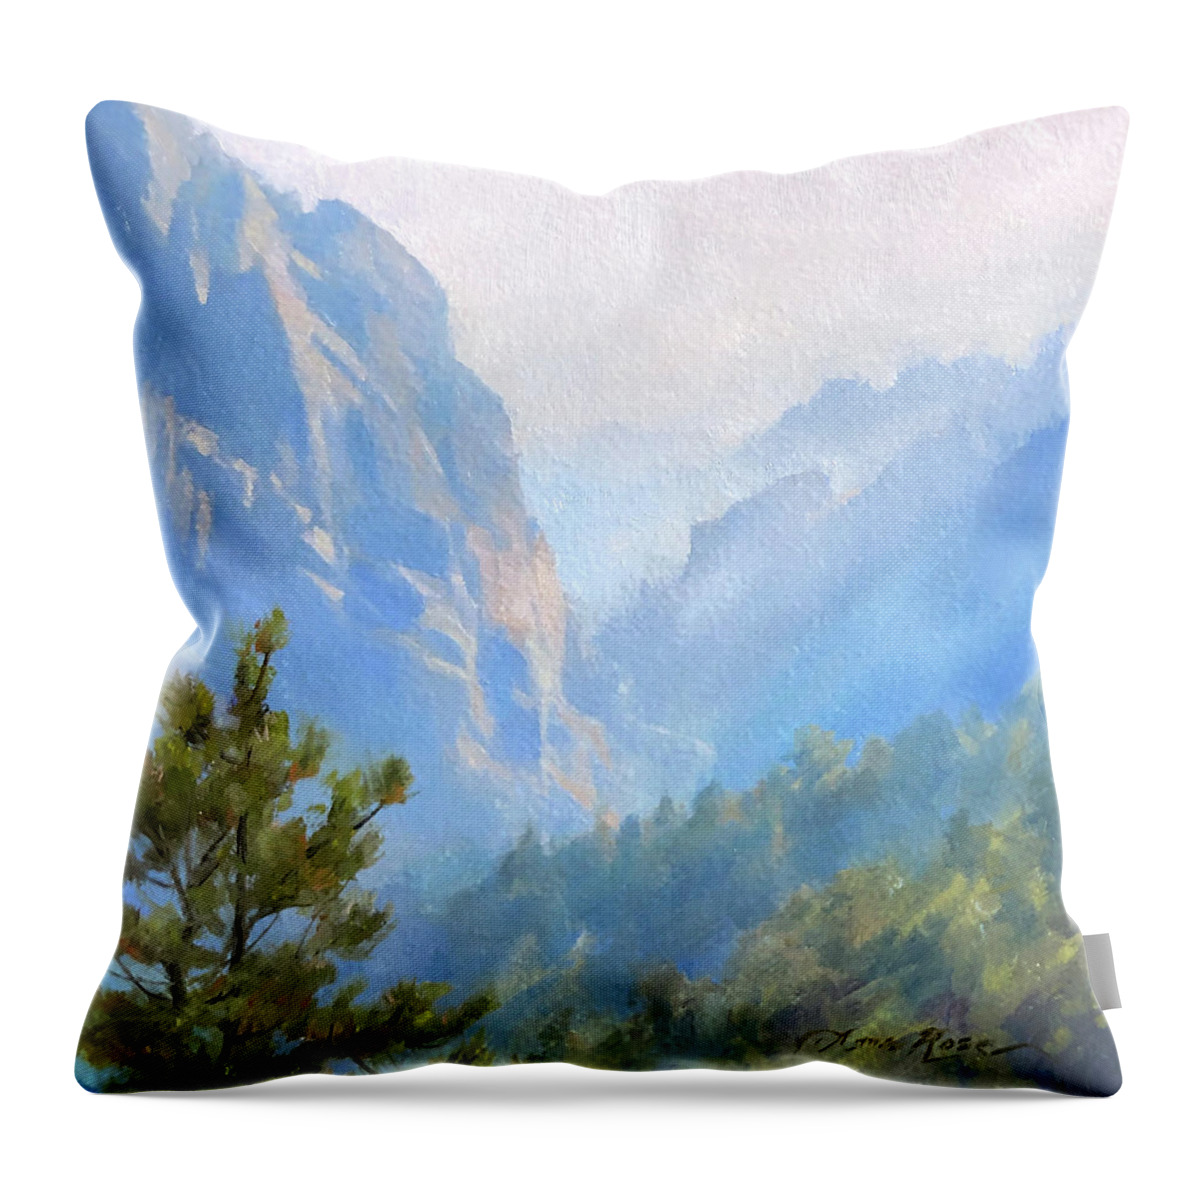 Eldorado Canyon State Park Throw Pillow featuring the painting Eldorado Canyon Haze by Anna Rose Bain